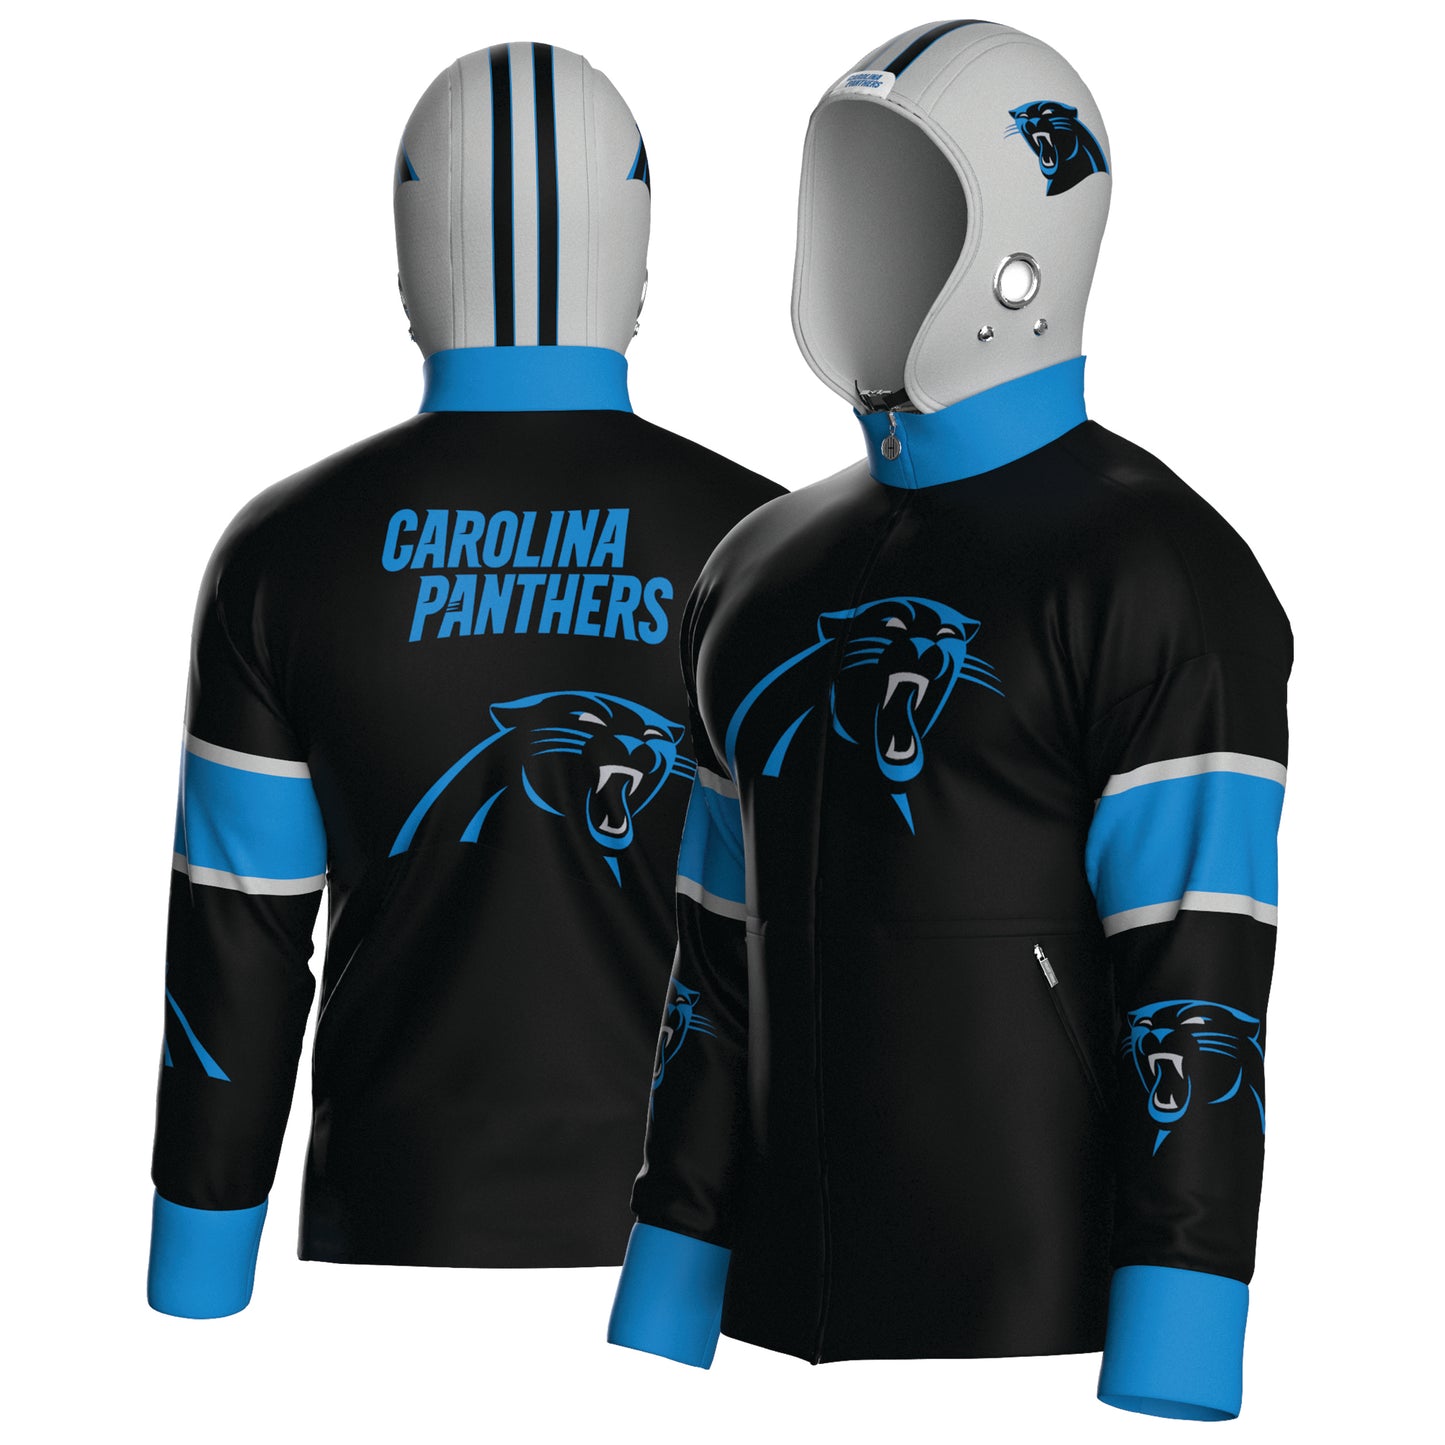 Carolina Panthers Home Zip-Up (youth)